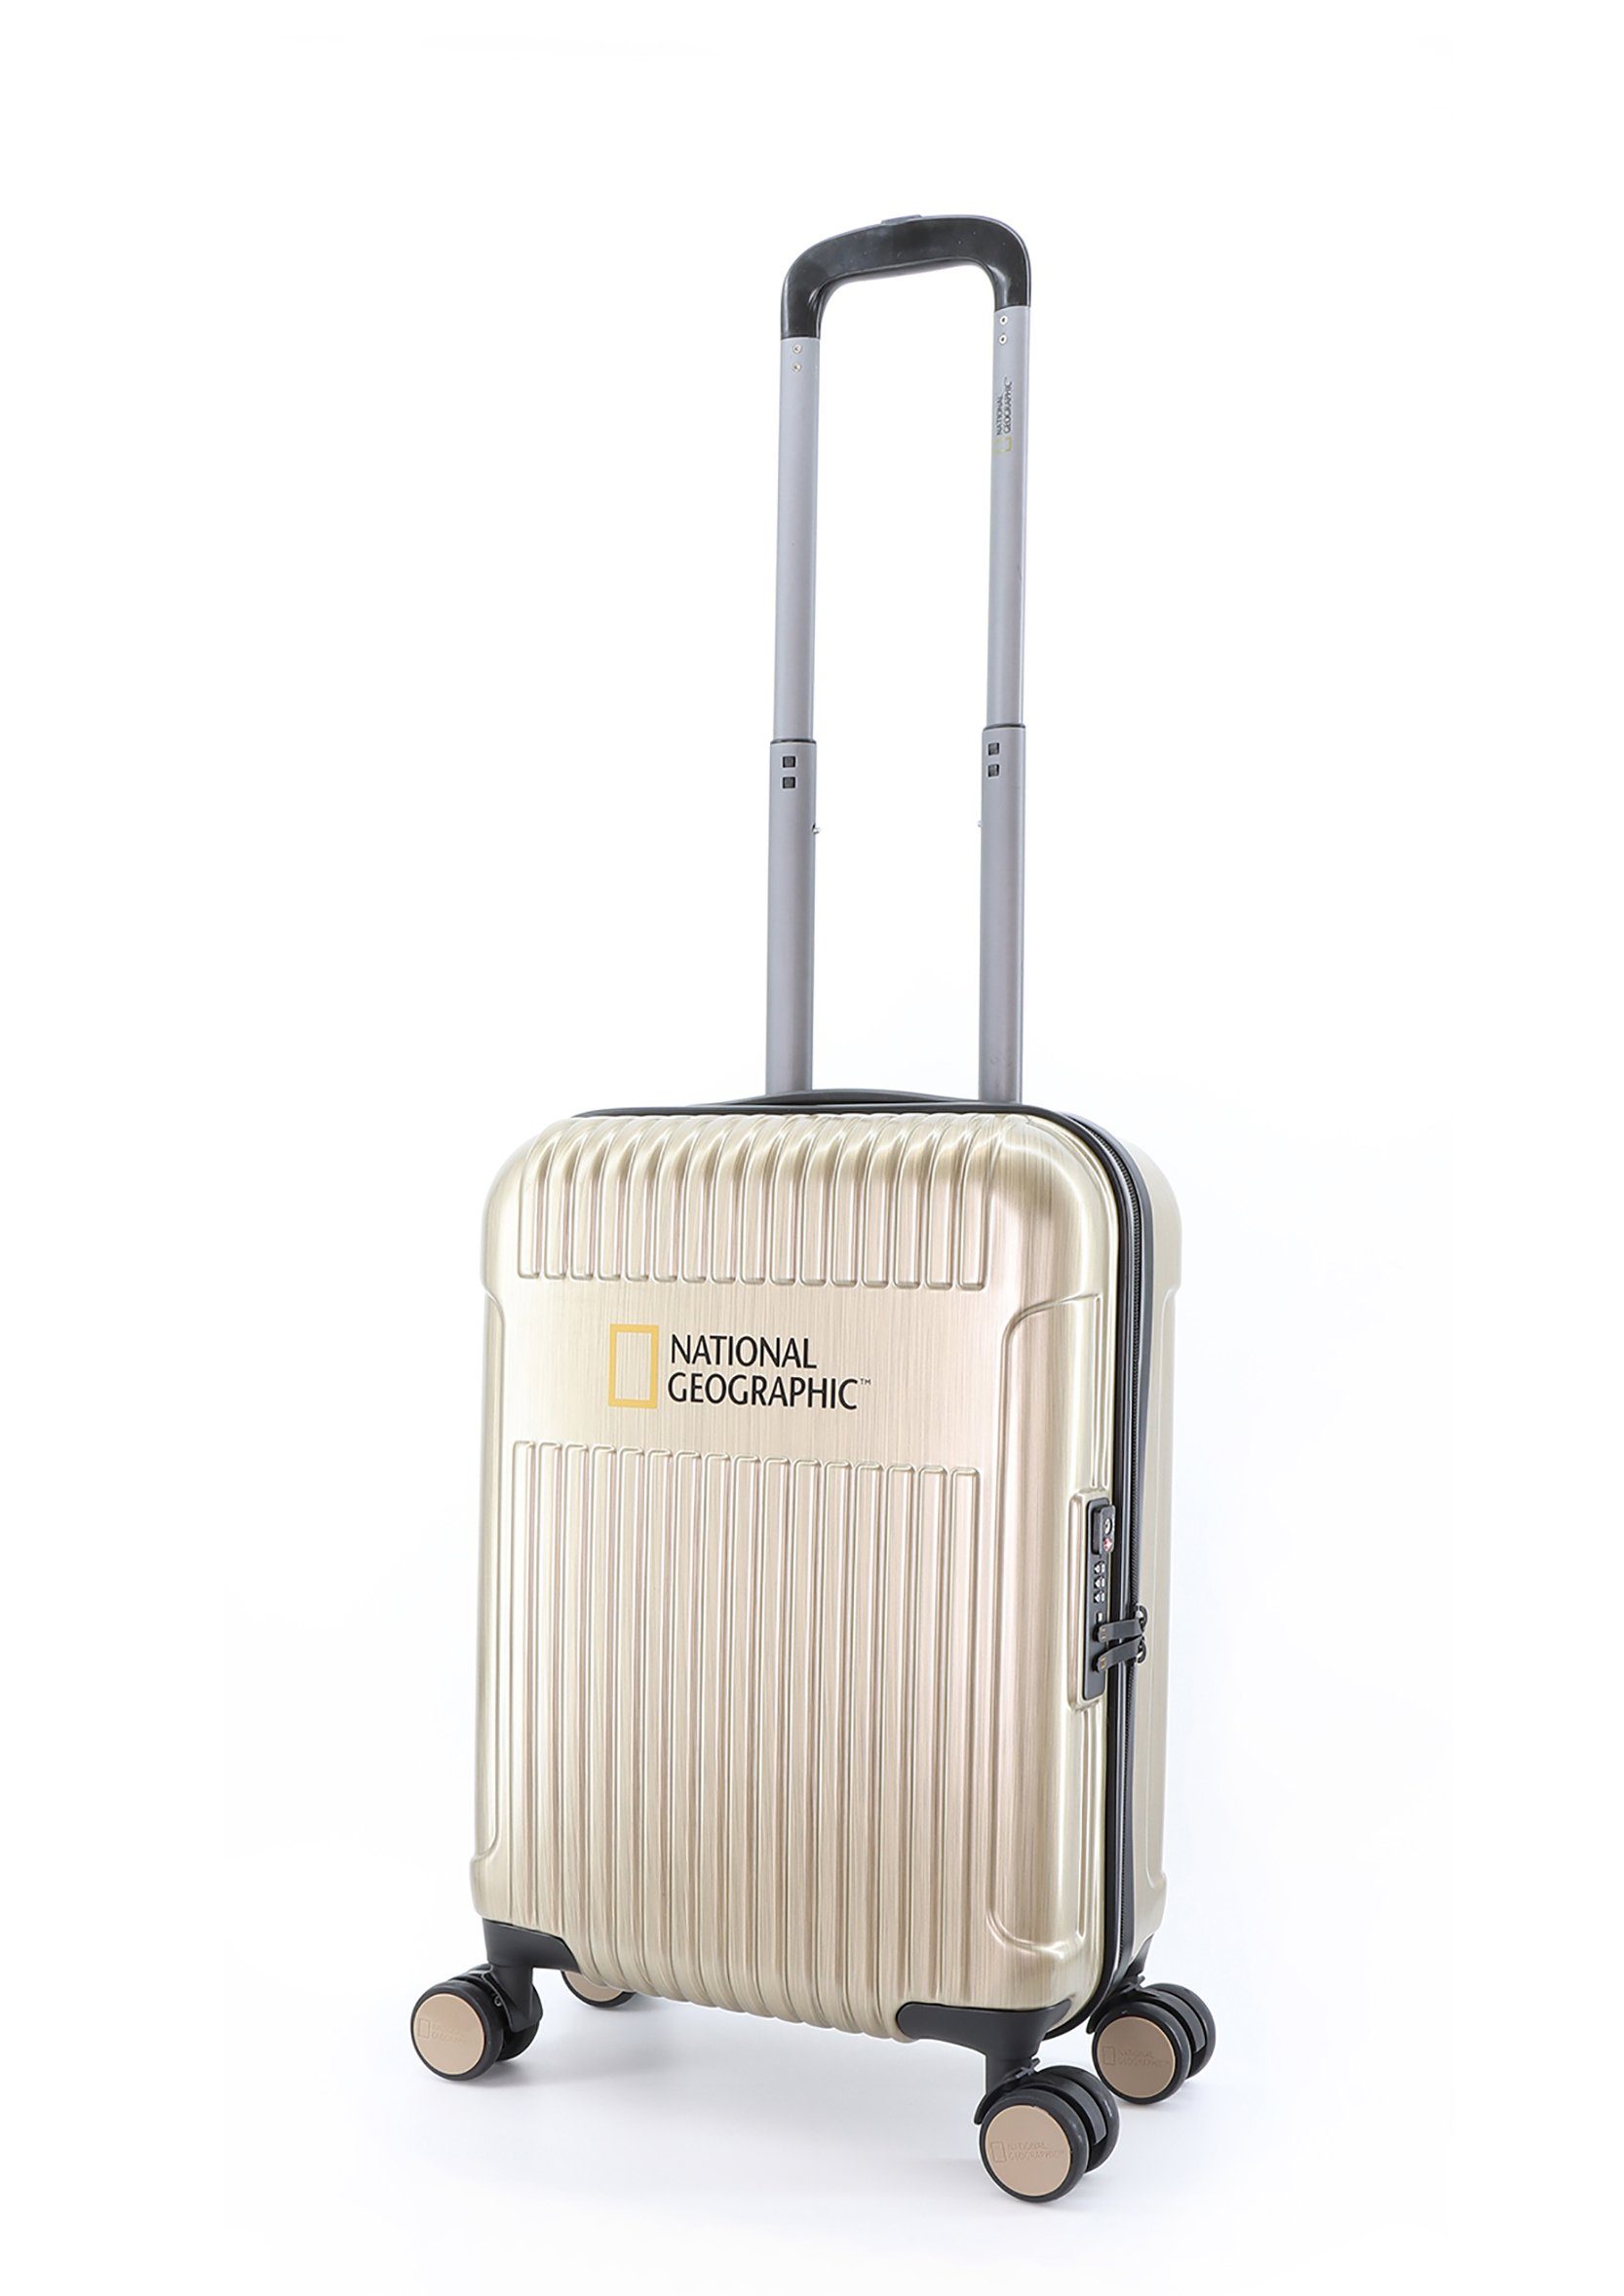 NATIONAL mit GEOGRAPHIC TSA-Zahlenschloss sicherem Transit, Koffer